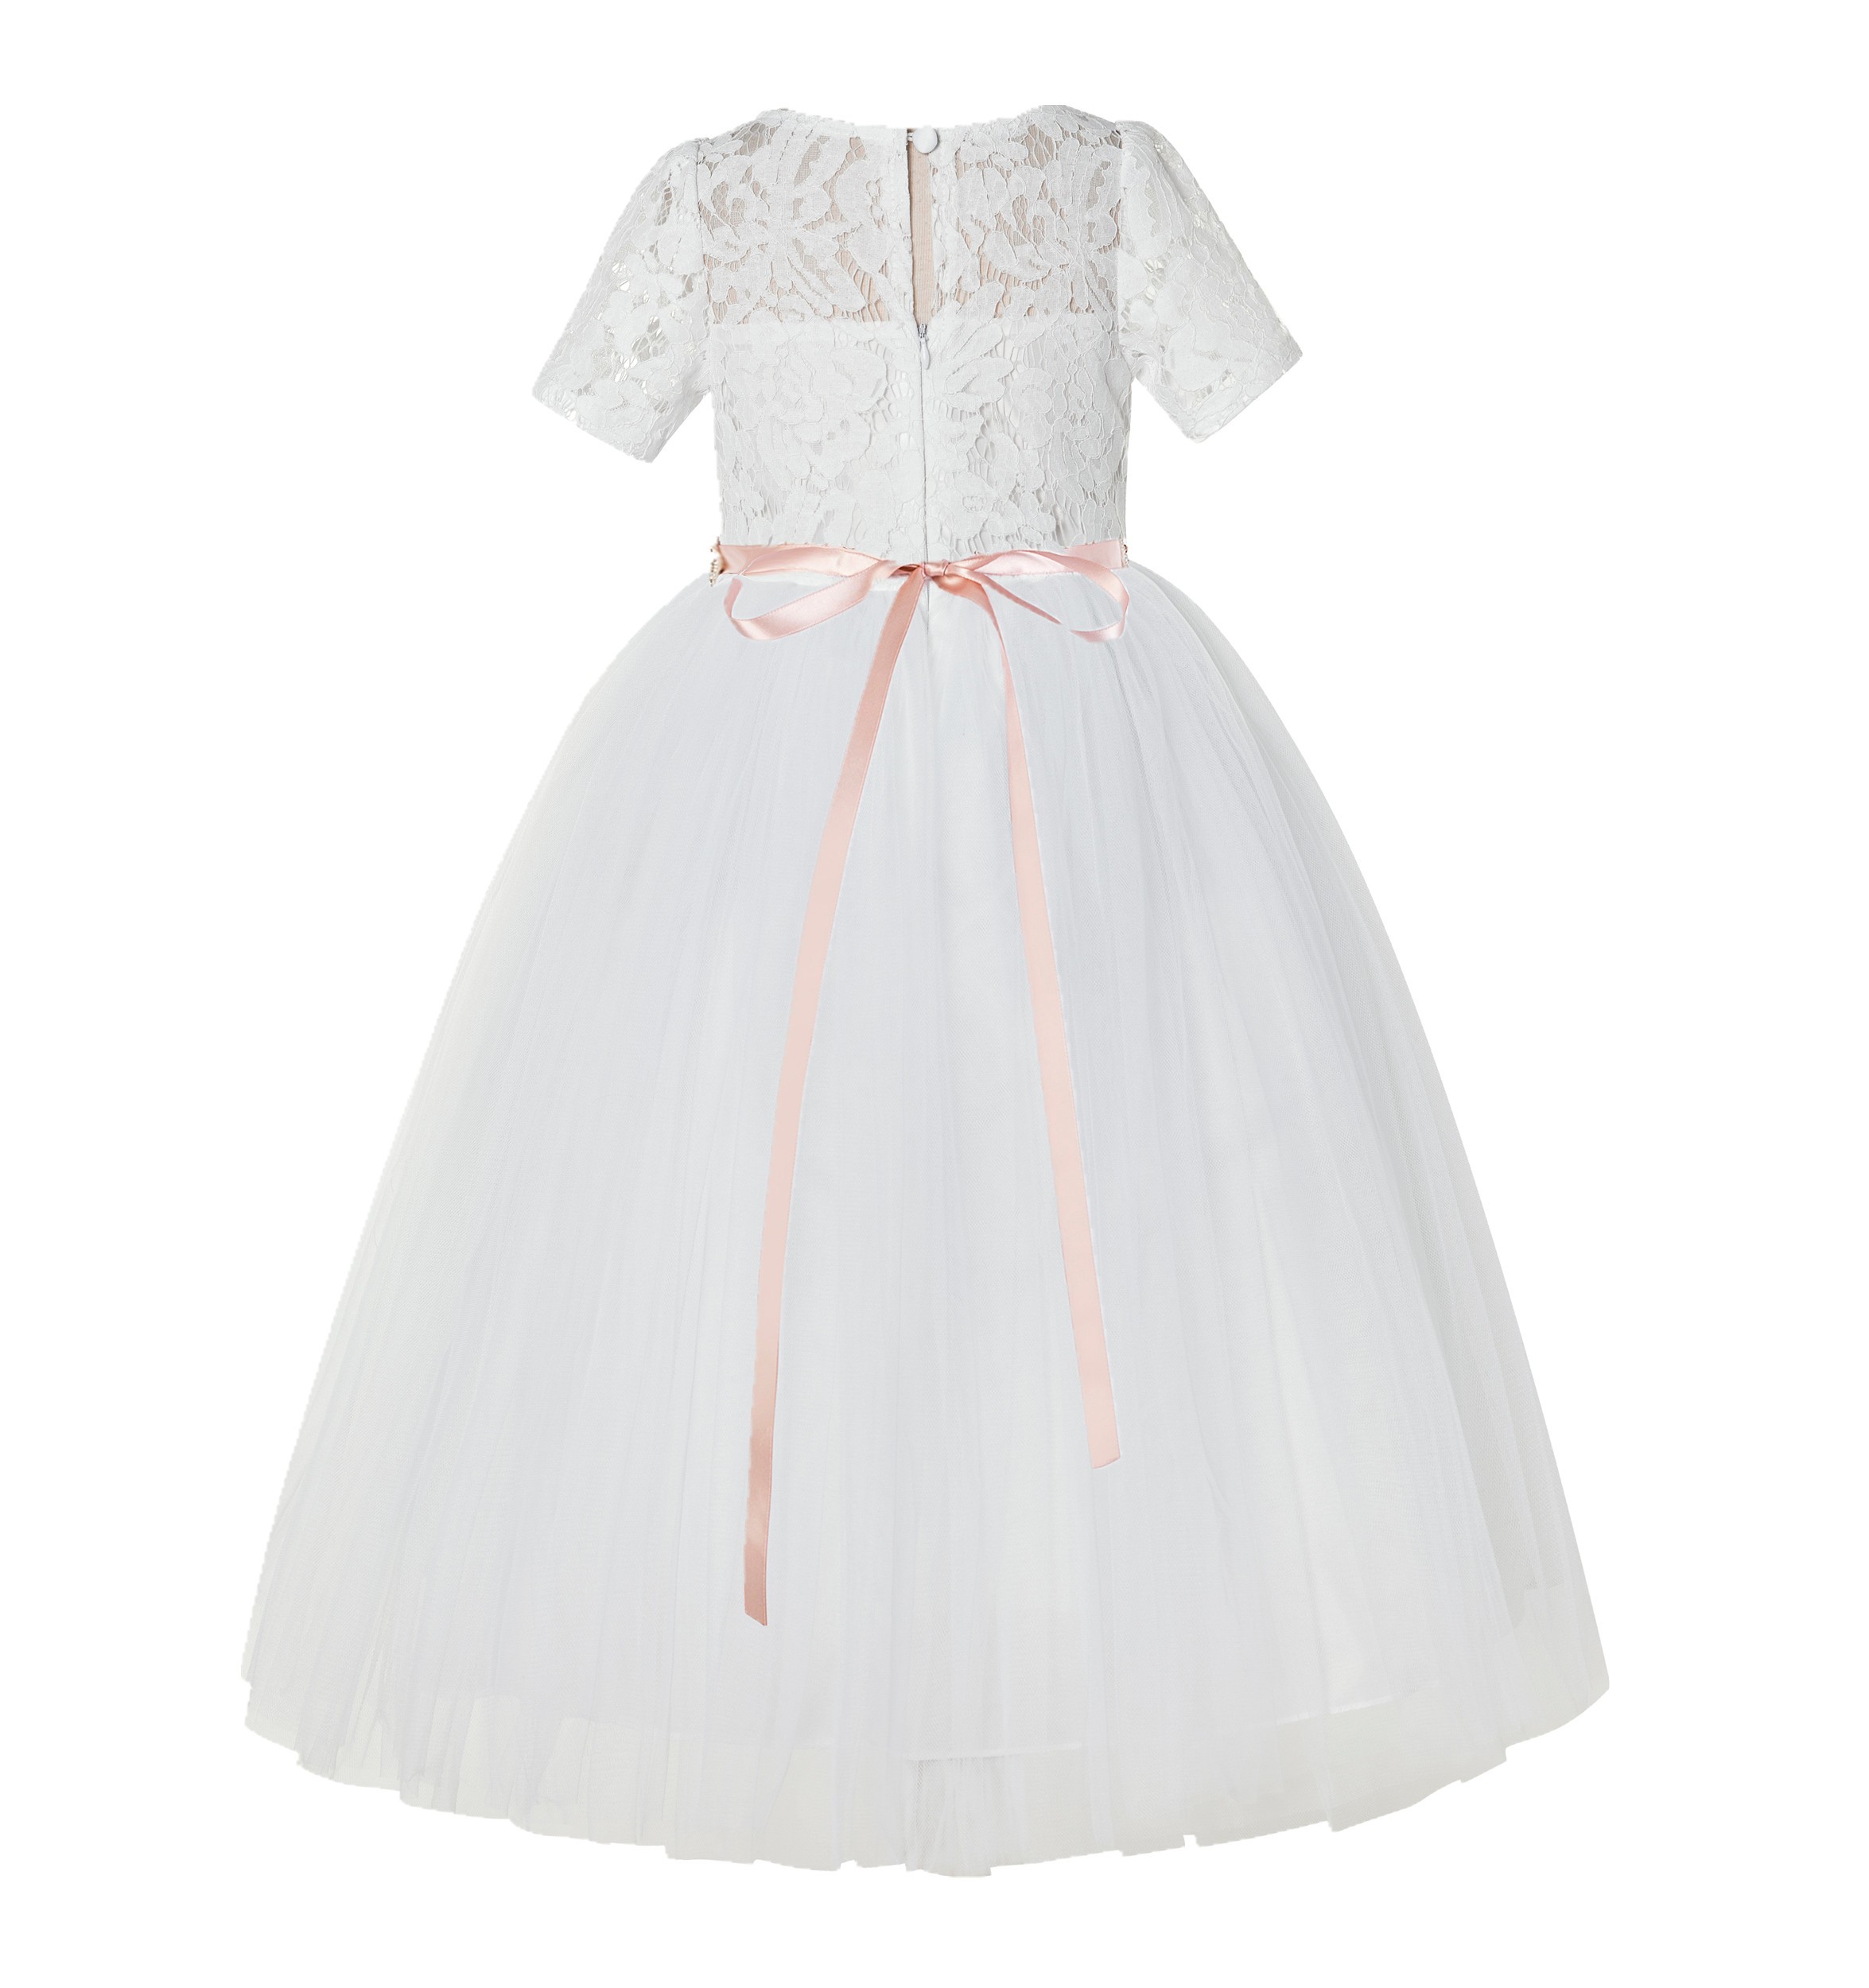 Ivory / Blush Pink Floral Lace Flower Girl Dress Communion Dress LG2